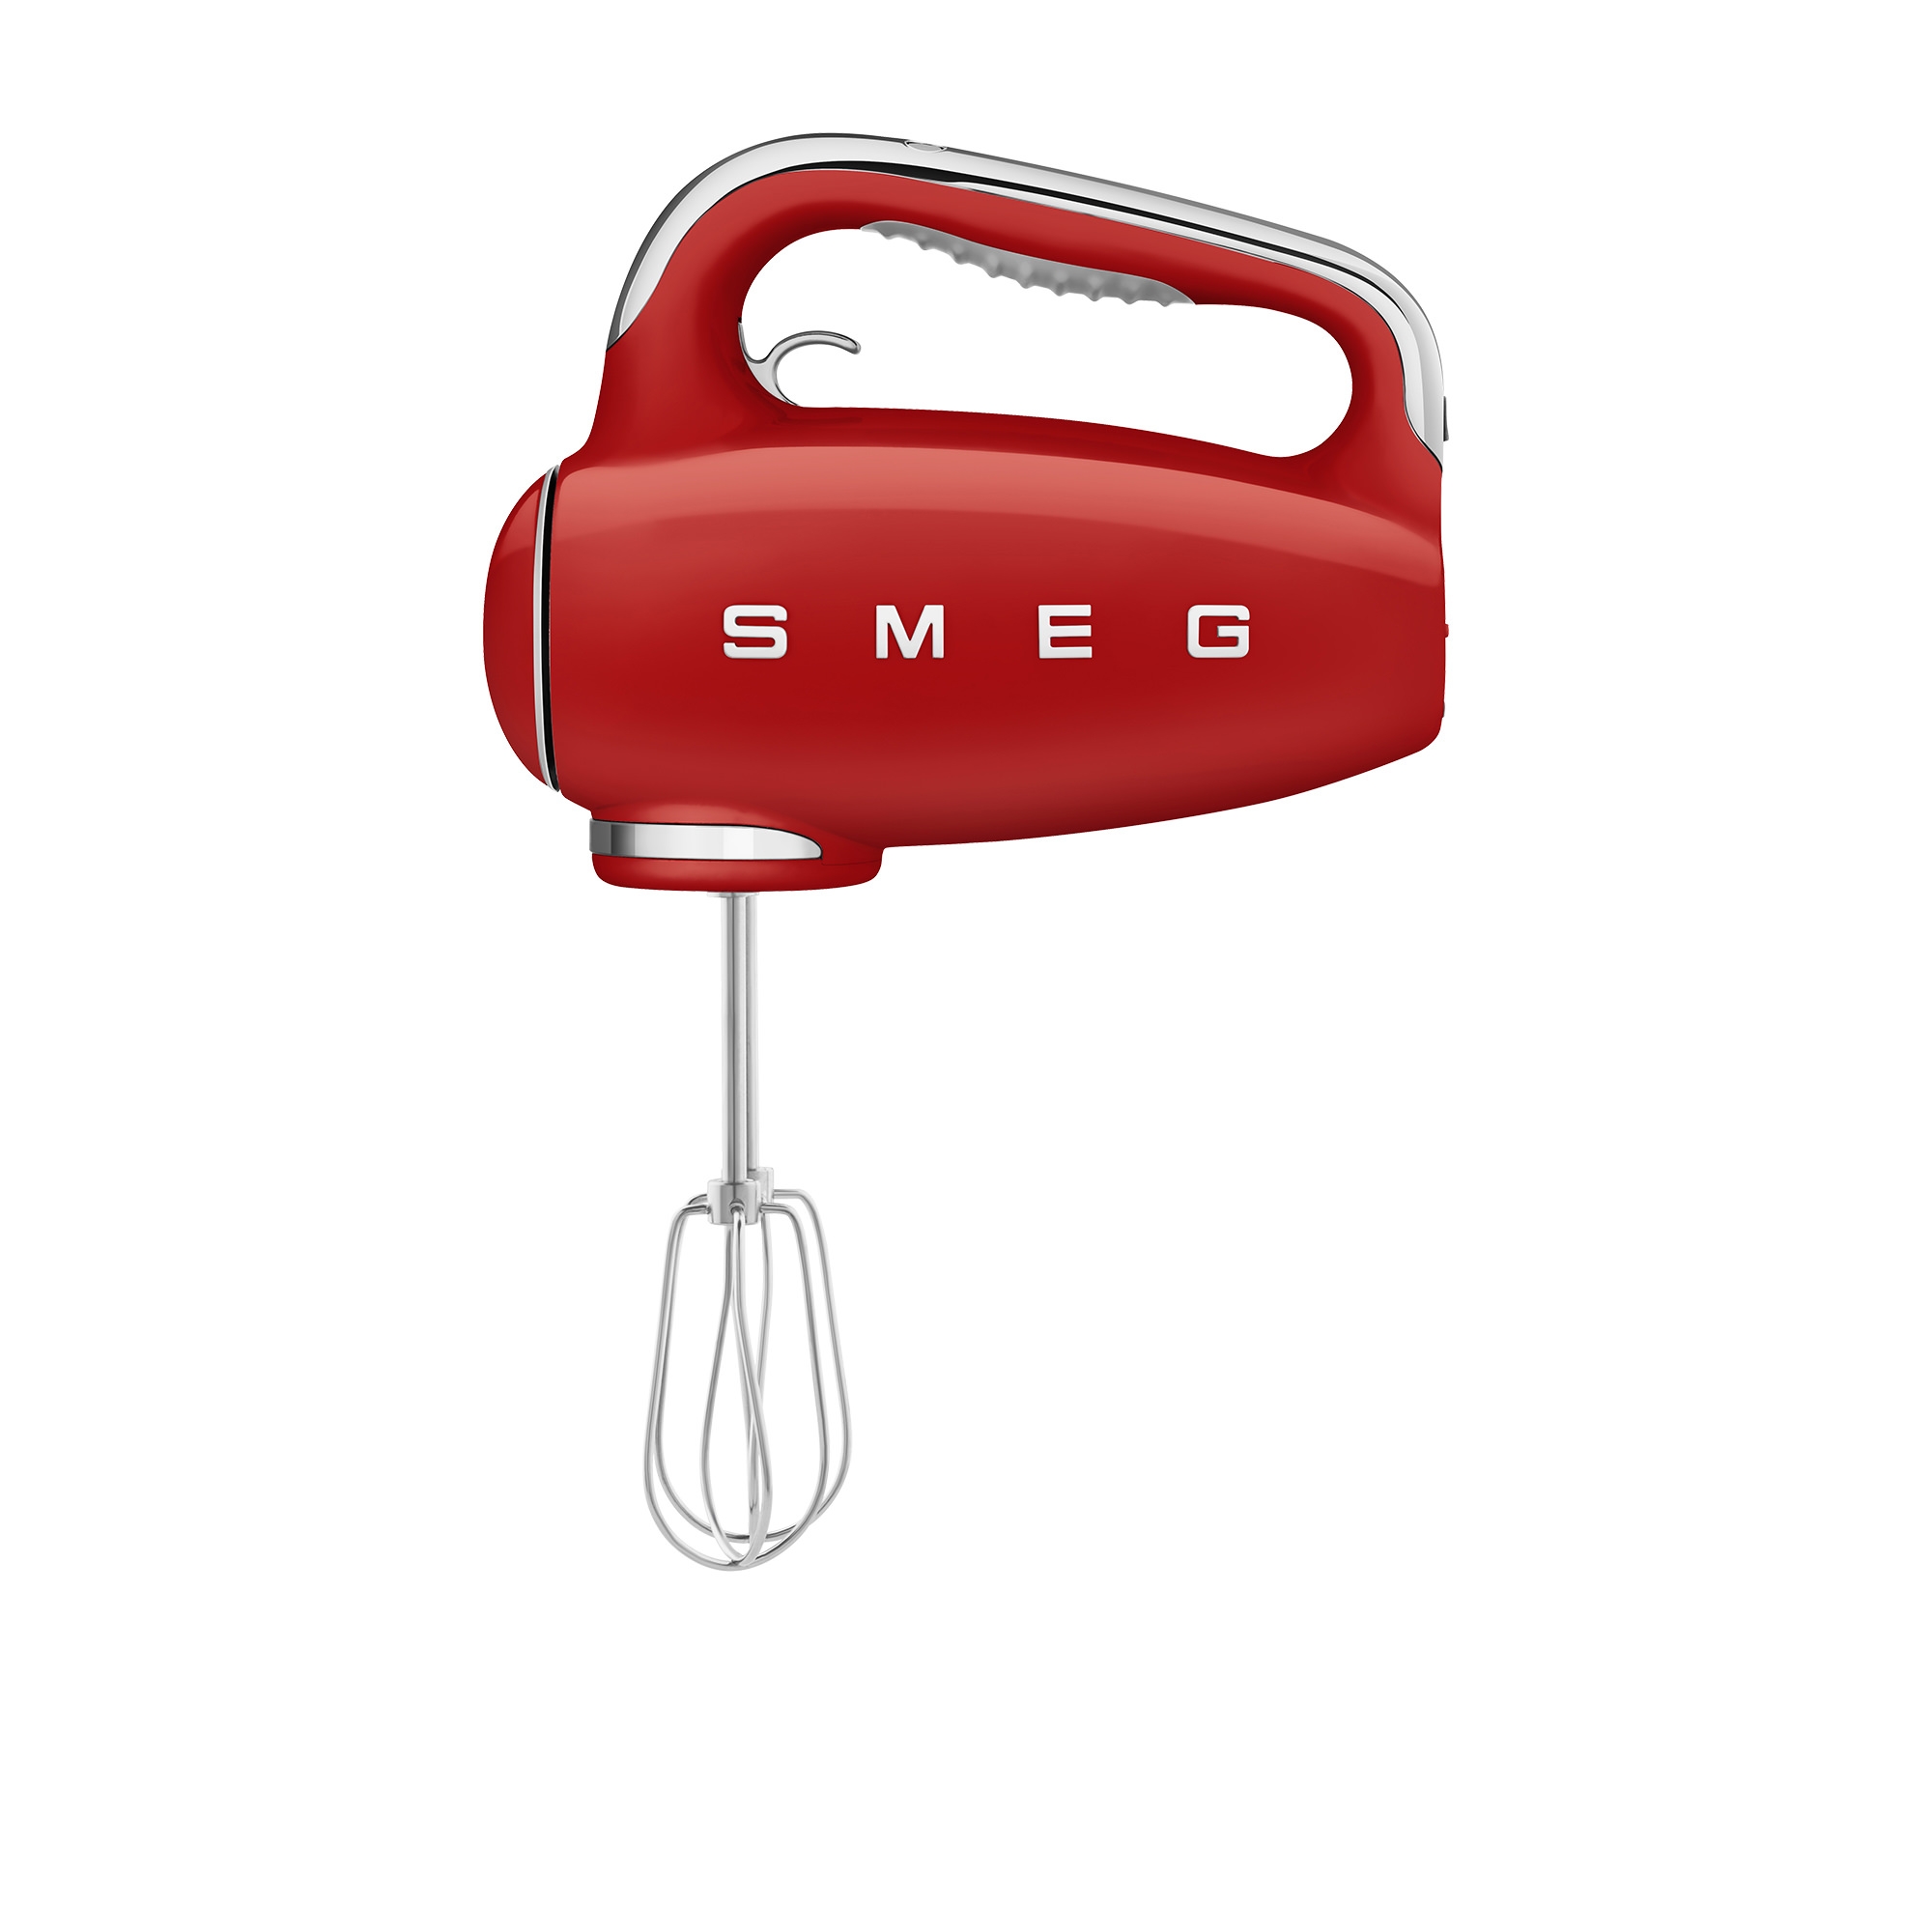 Smeg 50's Retro Style Digital Hand Mixer Red Image 1